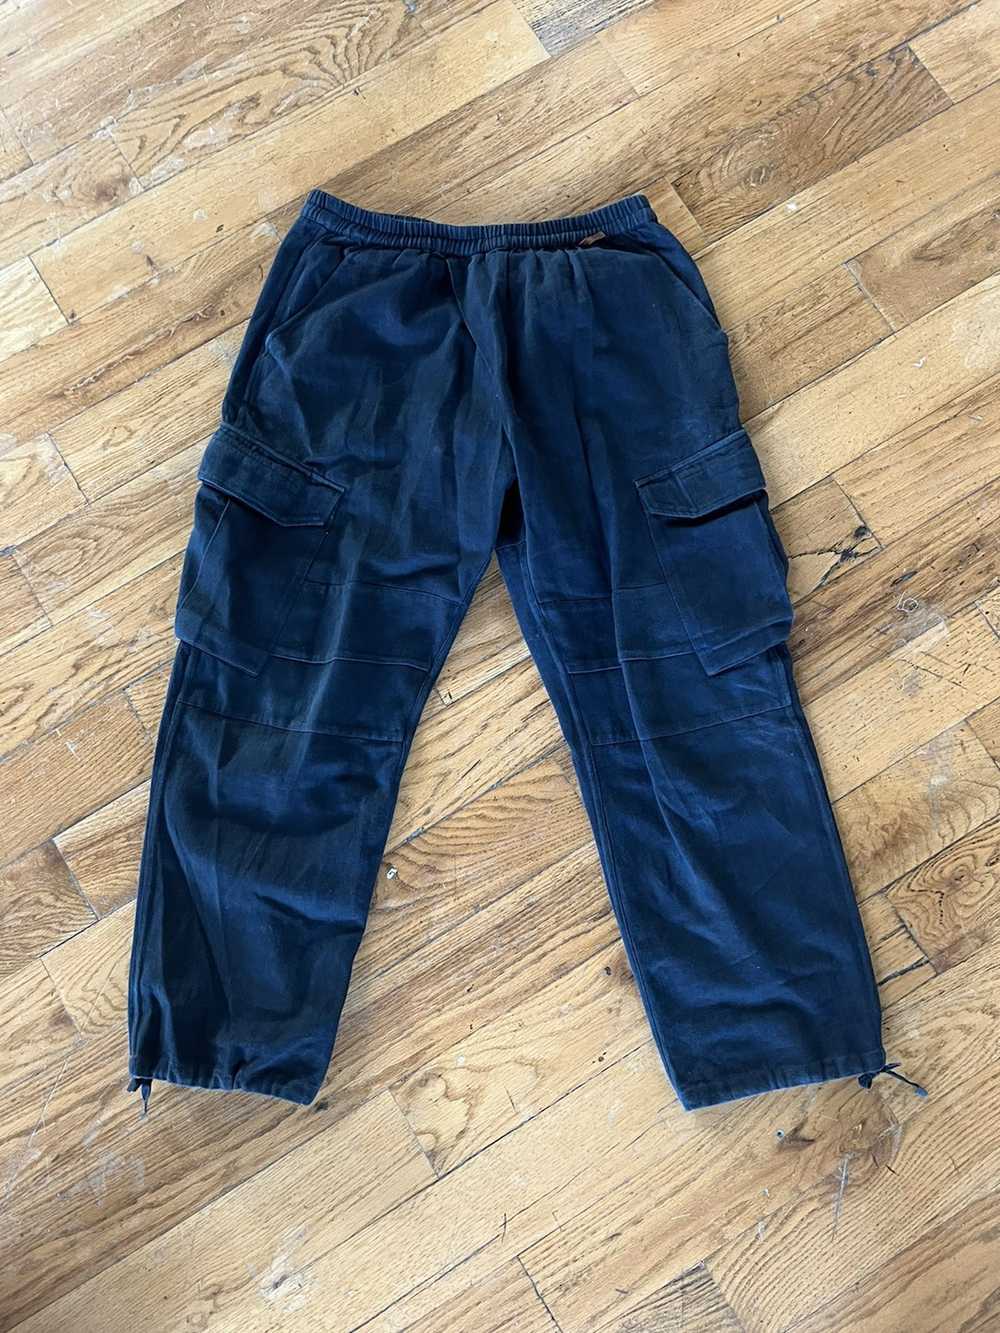 18 East 18 East Indigo-Dyed Cargo Pants - image 1